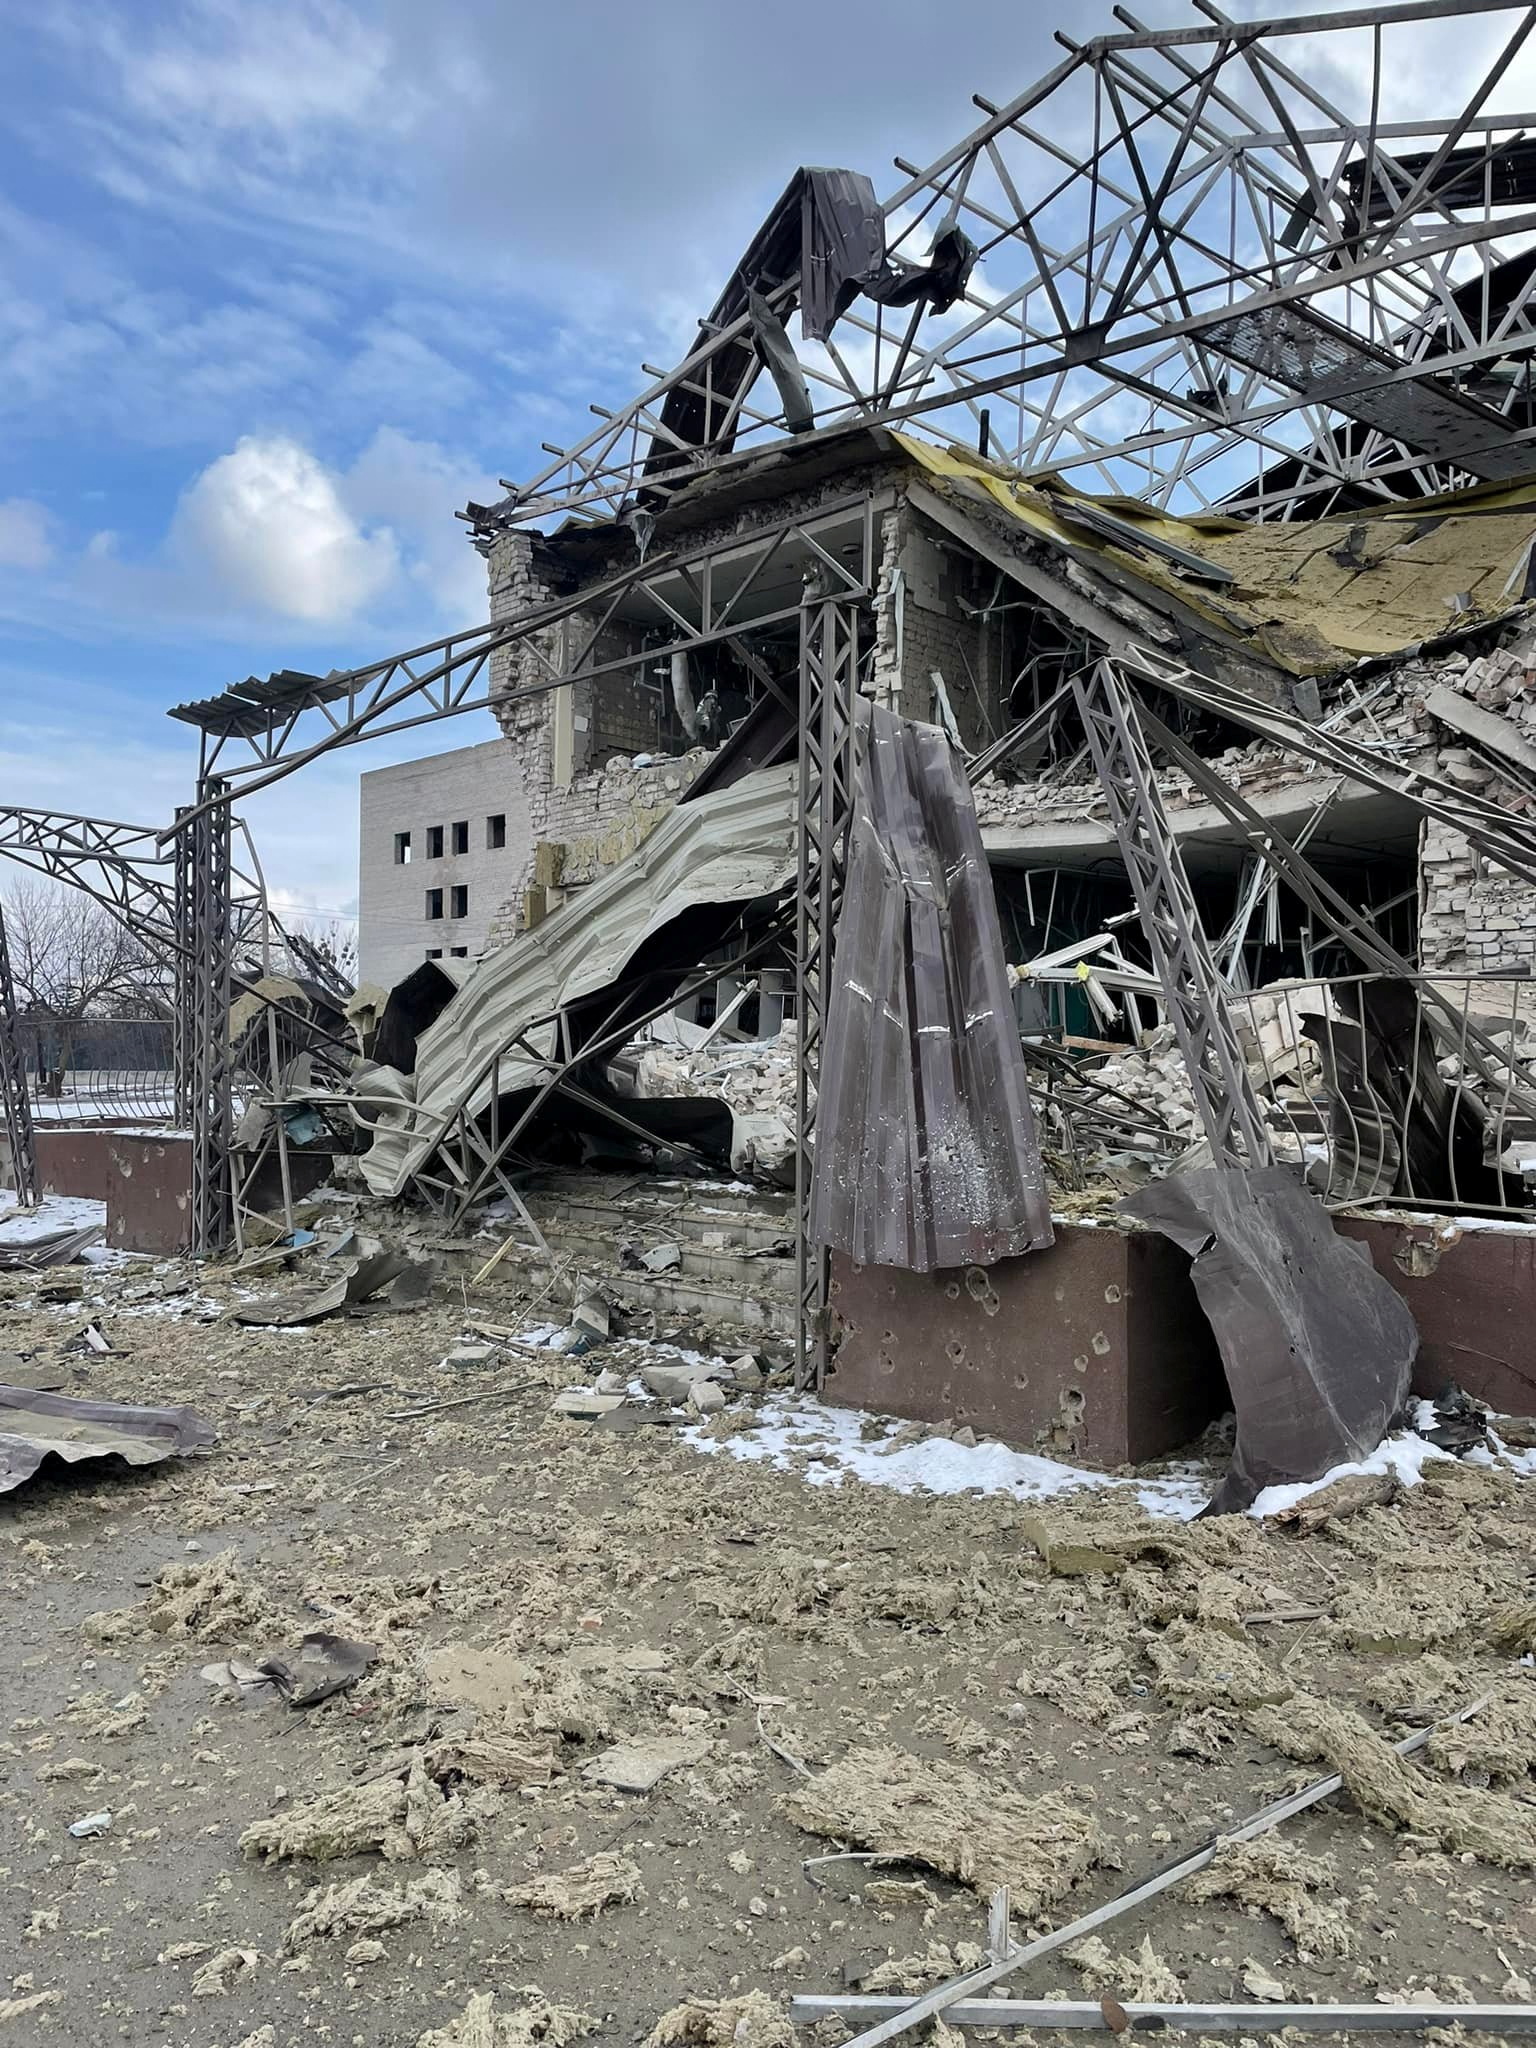 Ukraine: Russia’s cruel siege warfare tactics unlawfully killing civilians – new on-the-ground investigation